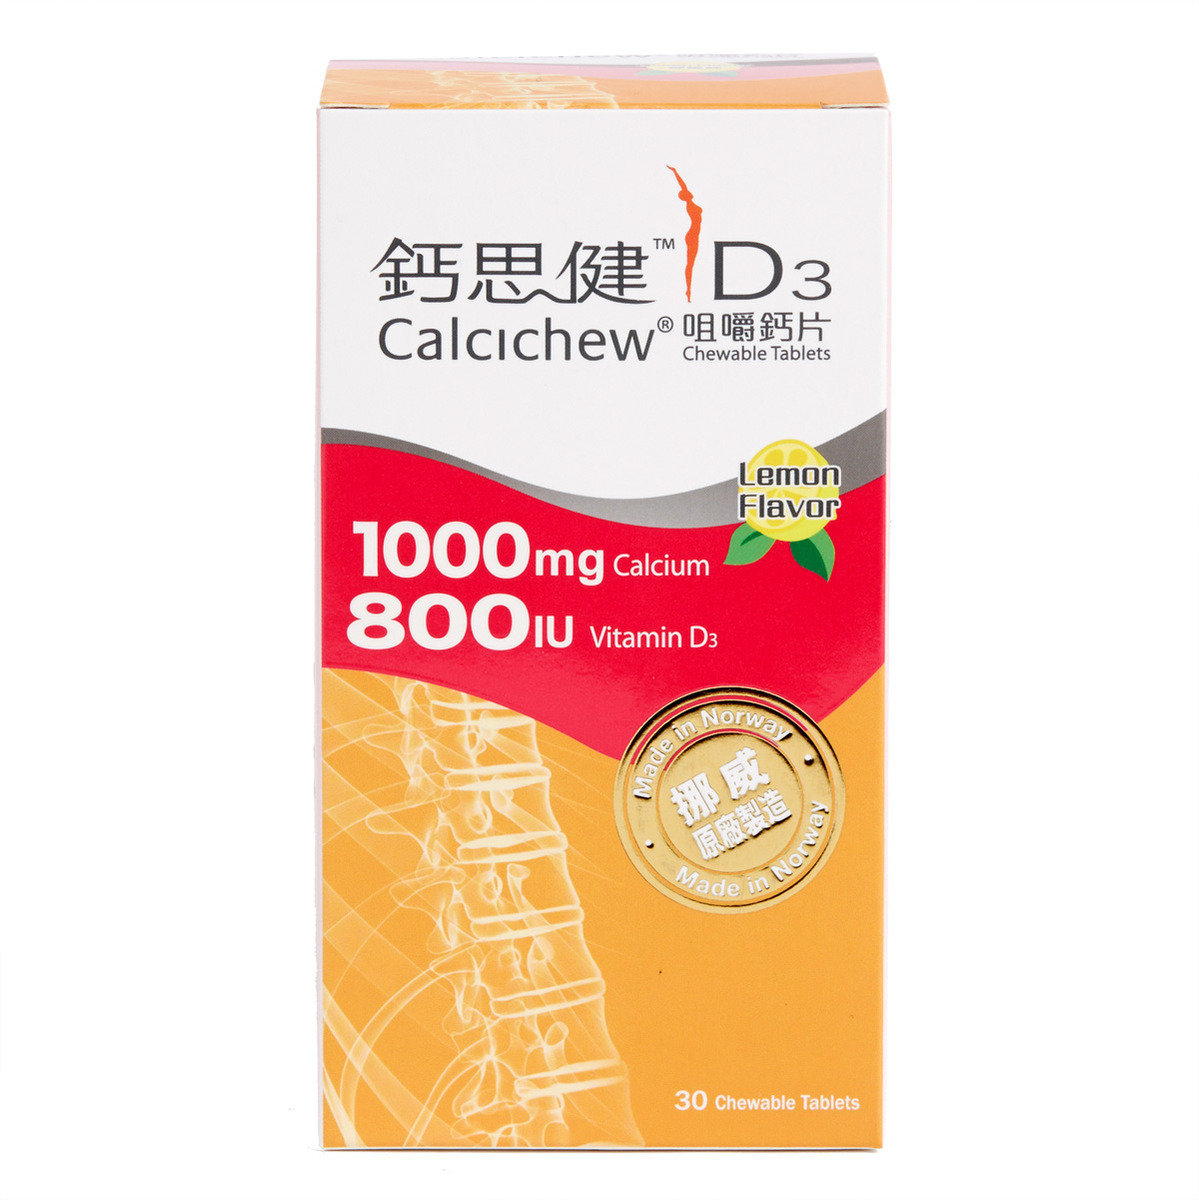 Calcichew D3咀嚼鈣片 (1000mg鈣+800IU維他命D3)